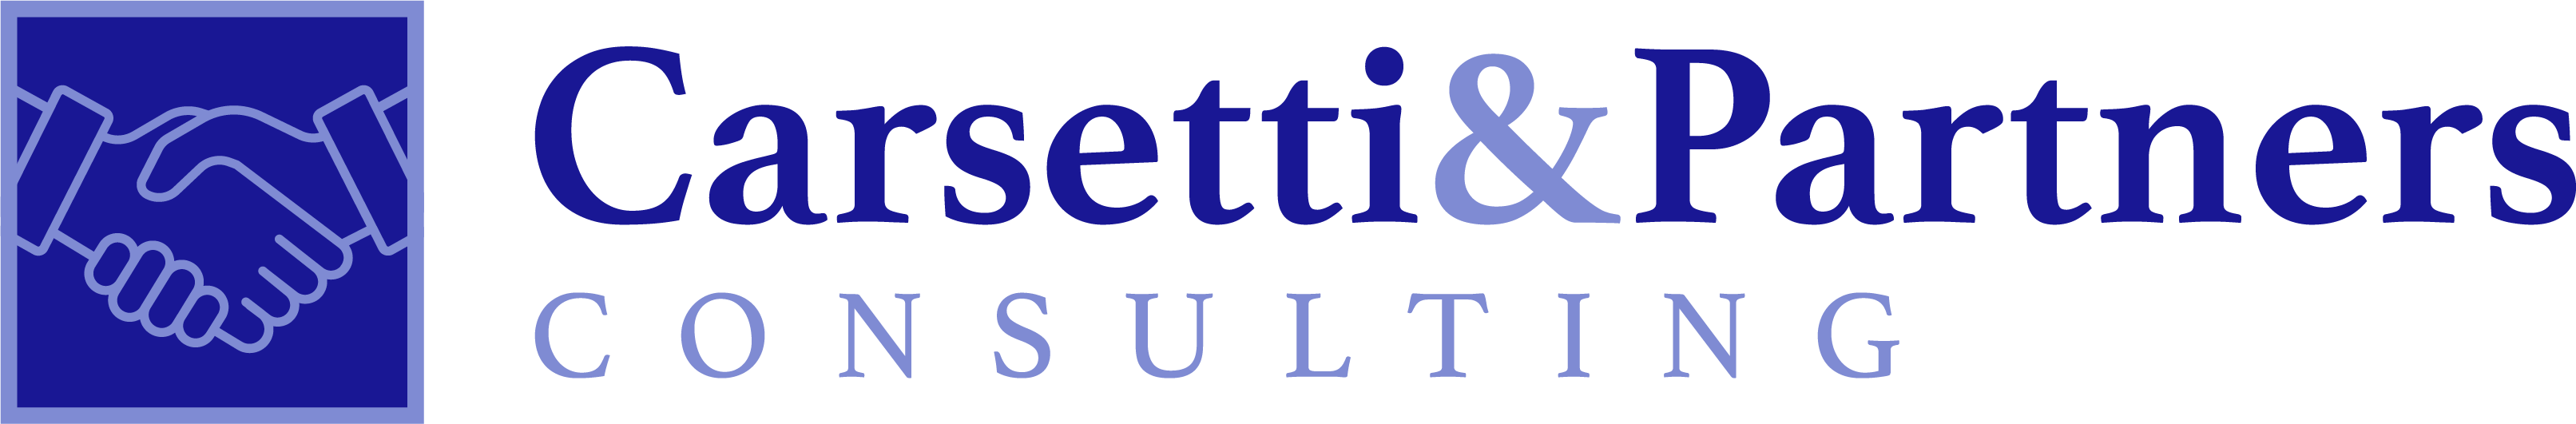 Carsetti&Partners logo